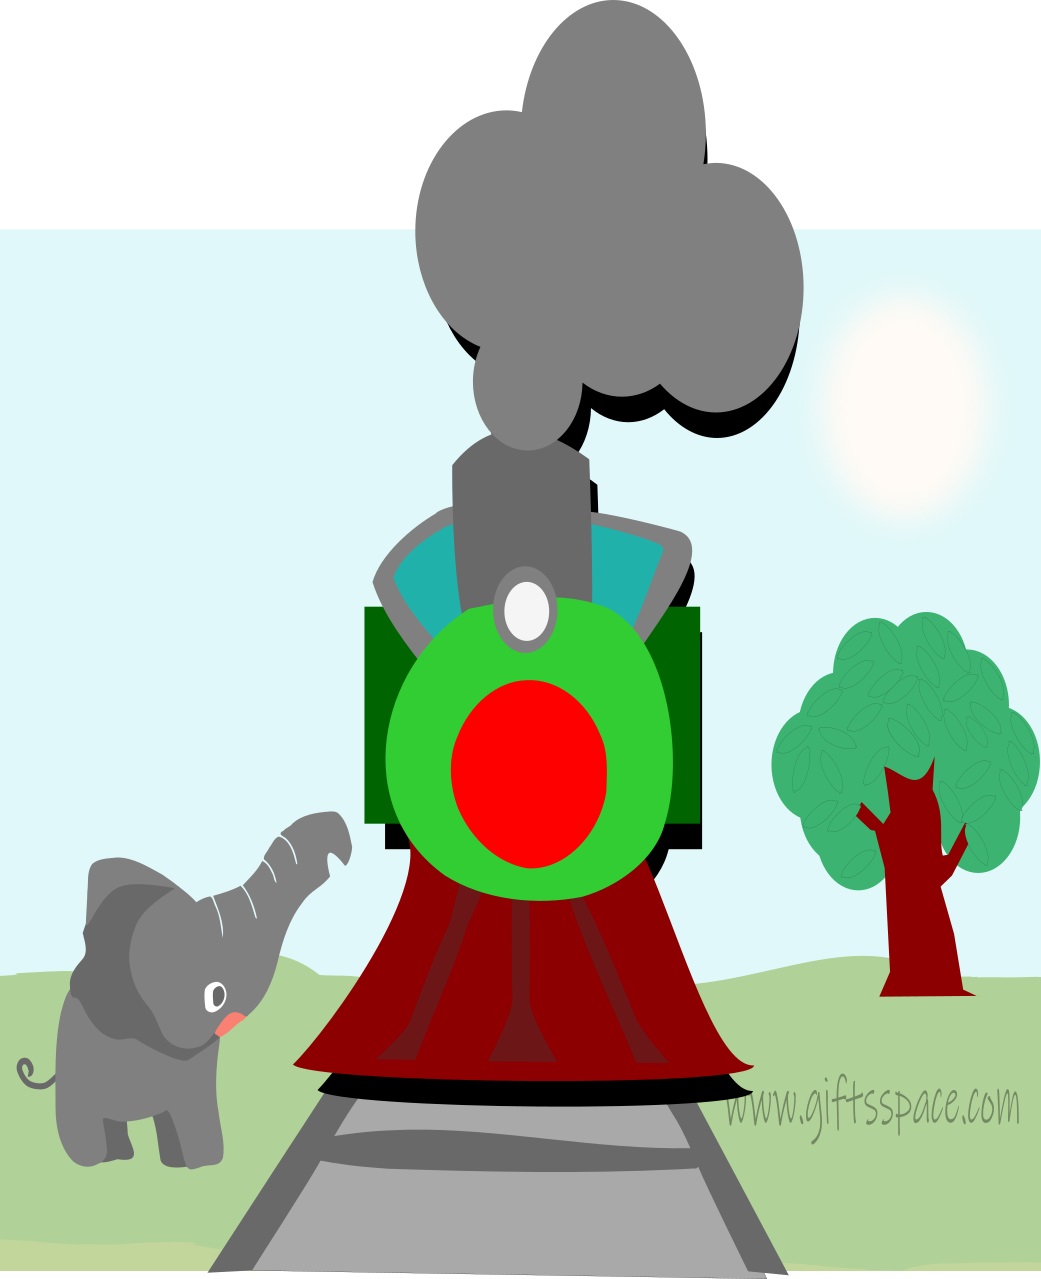 elephant greets the little train